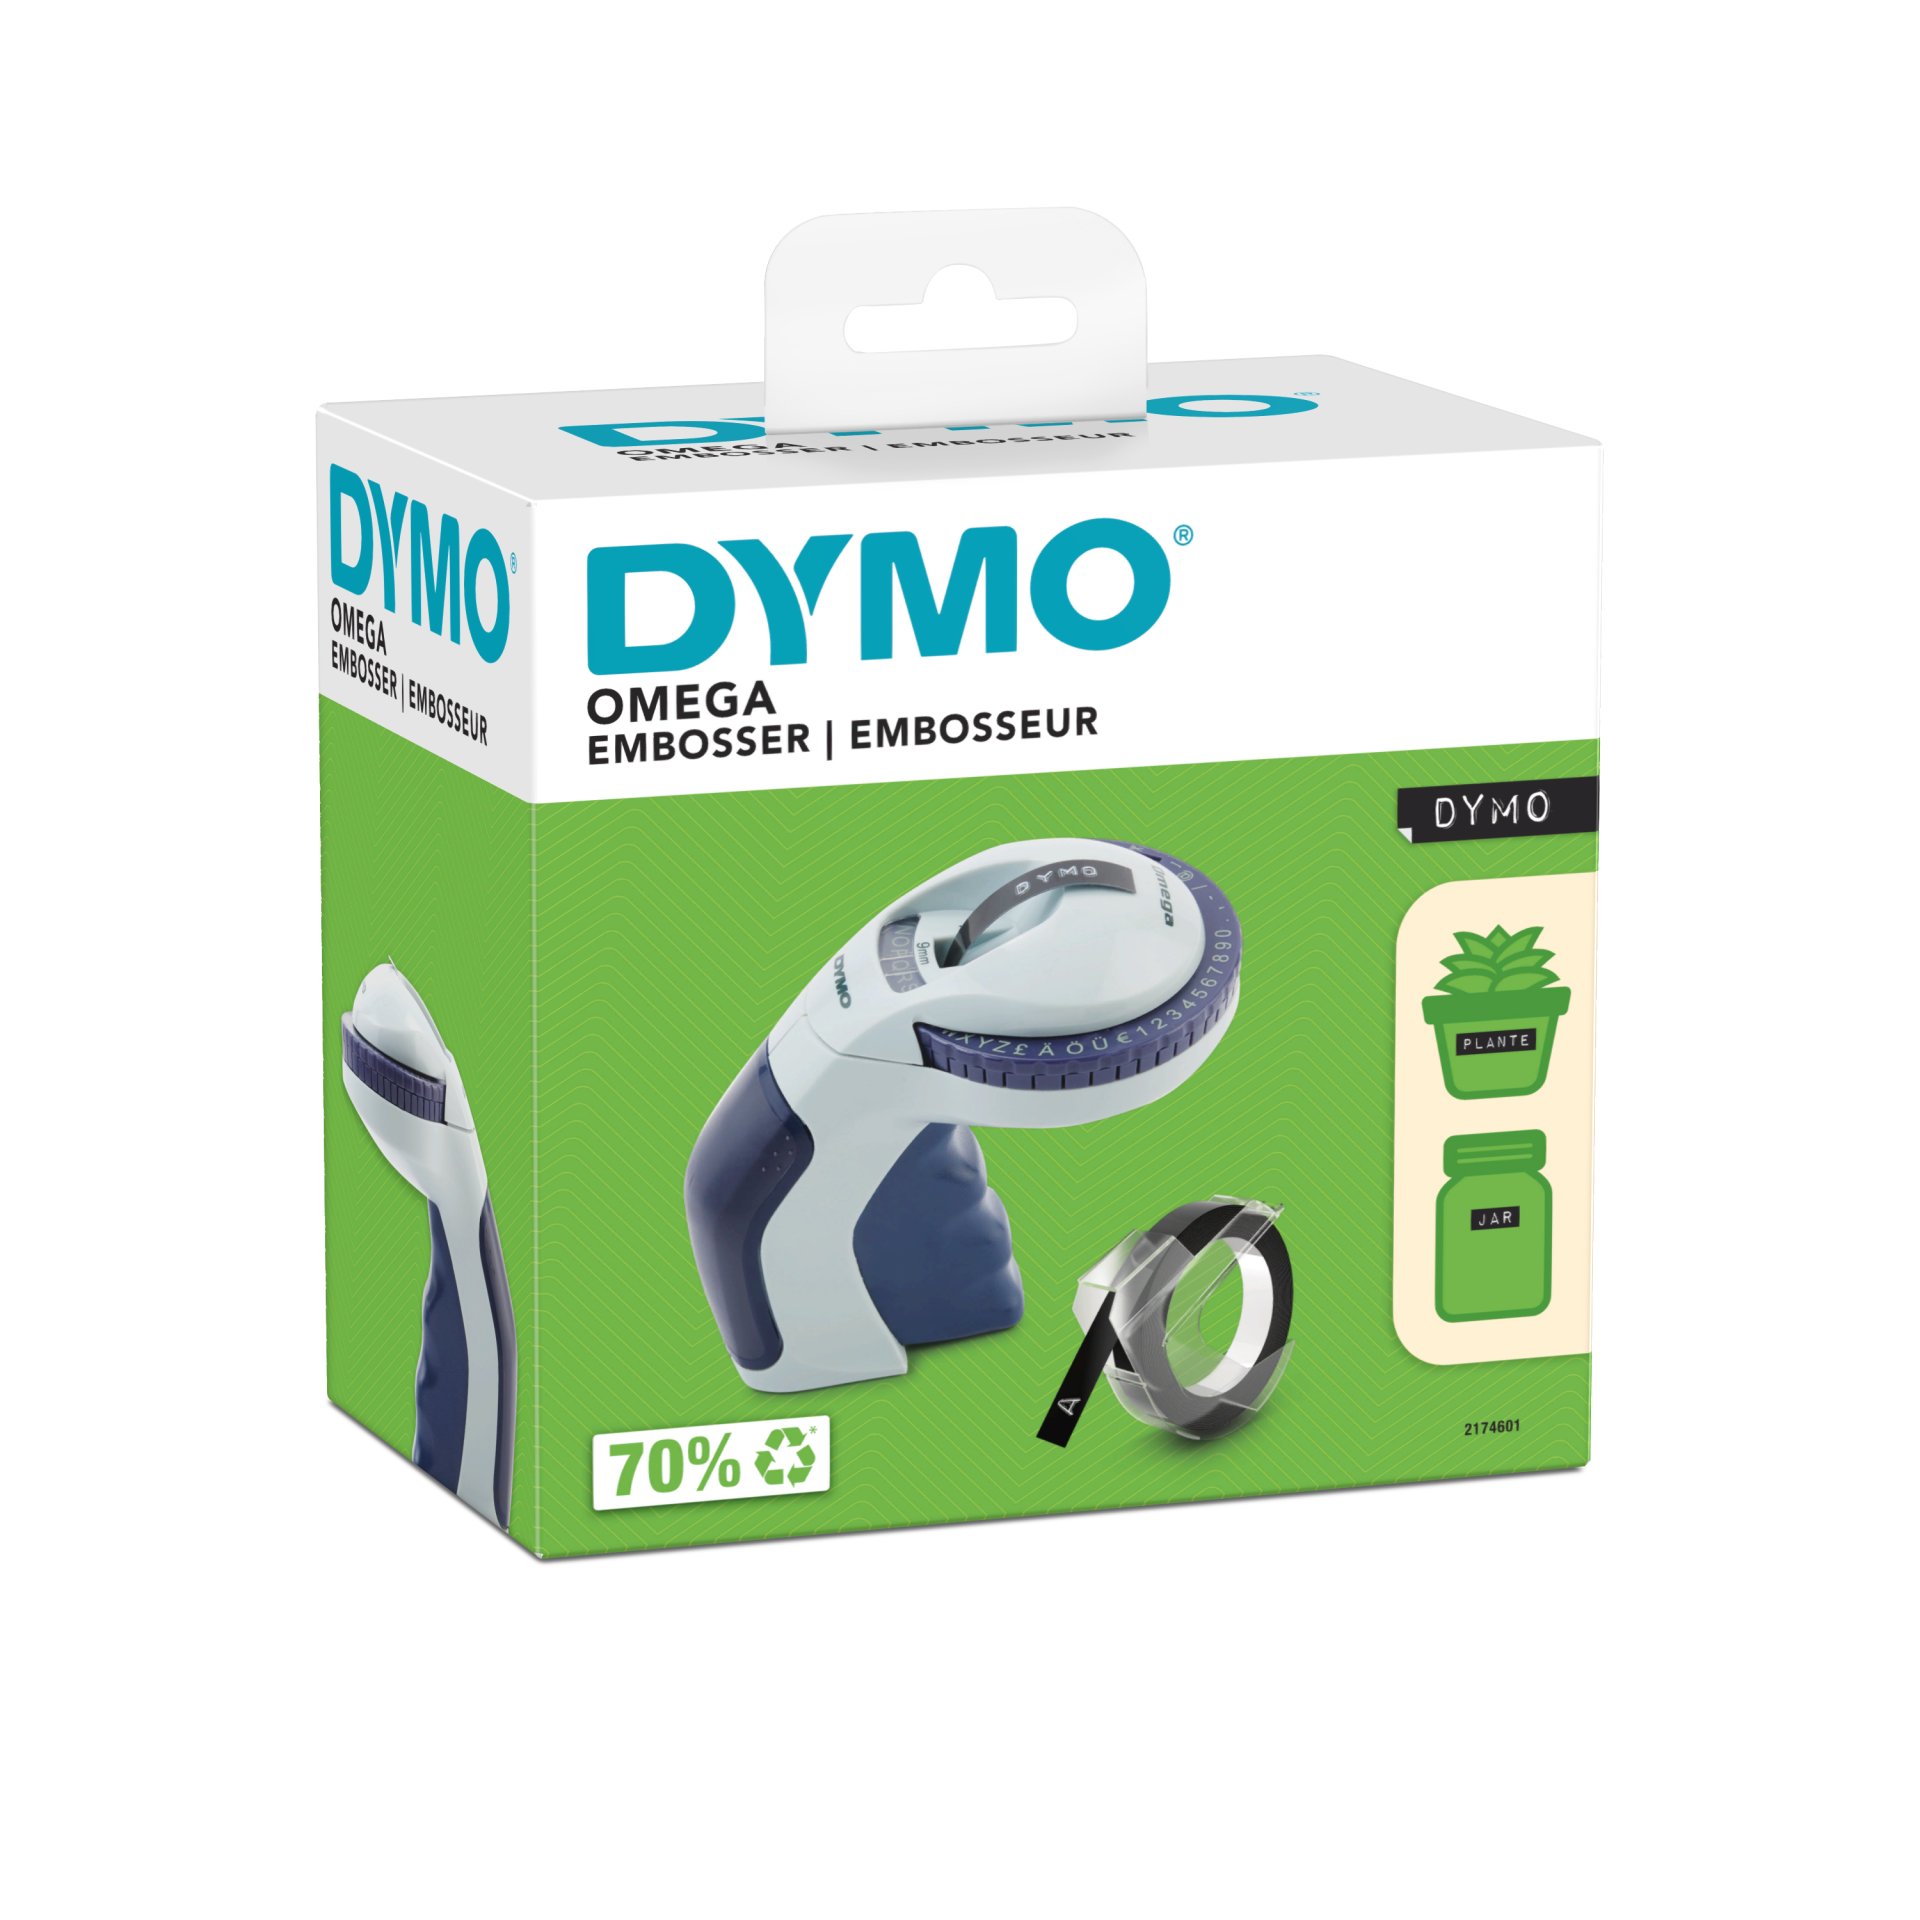 Buy Dymo Omega embossing label maker online at Modulor